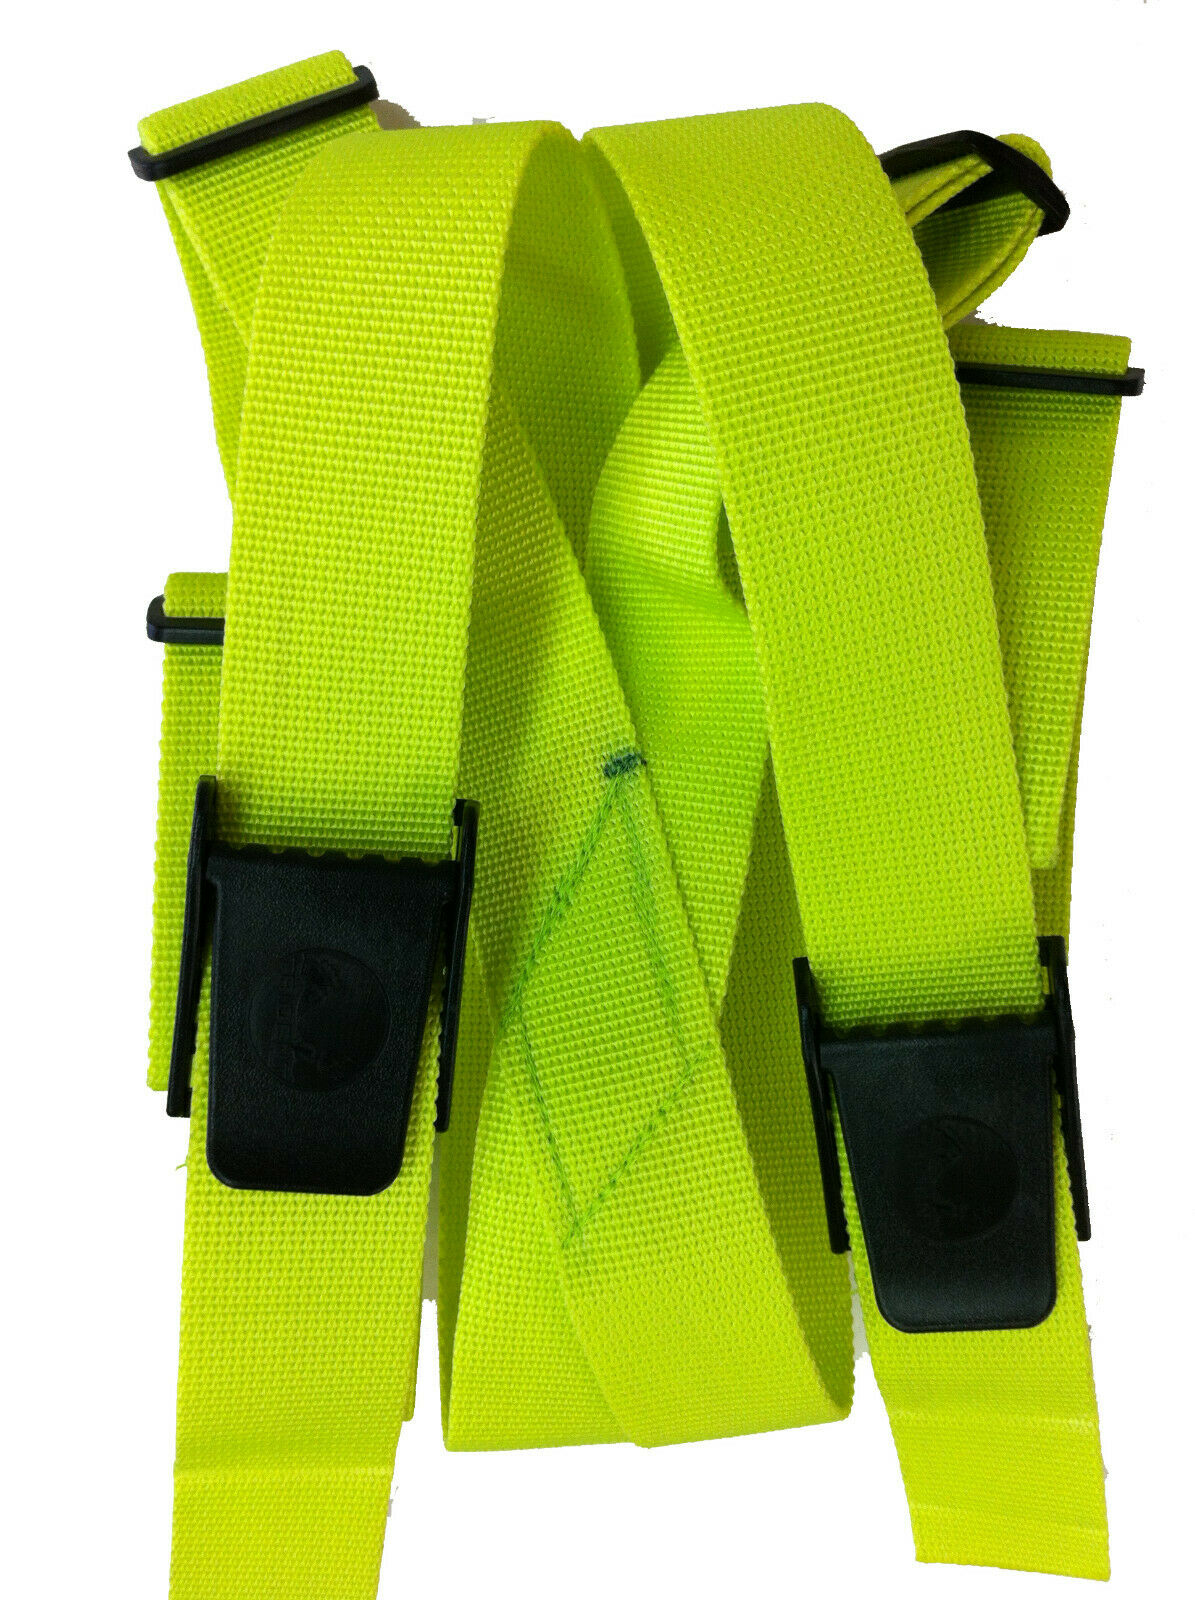 Weight Belt Suspenders Scuba Diving Dive Equipment New Wb80 Yellow